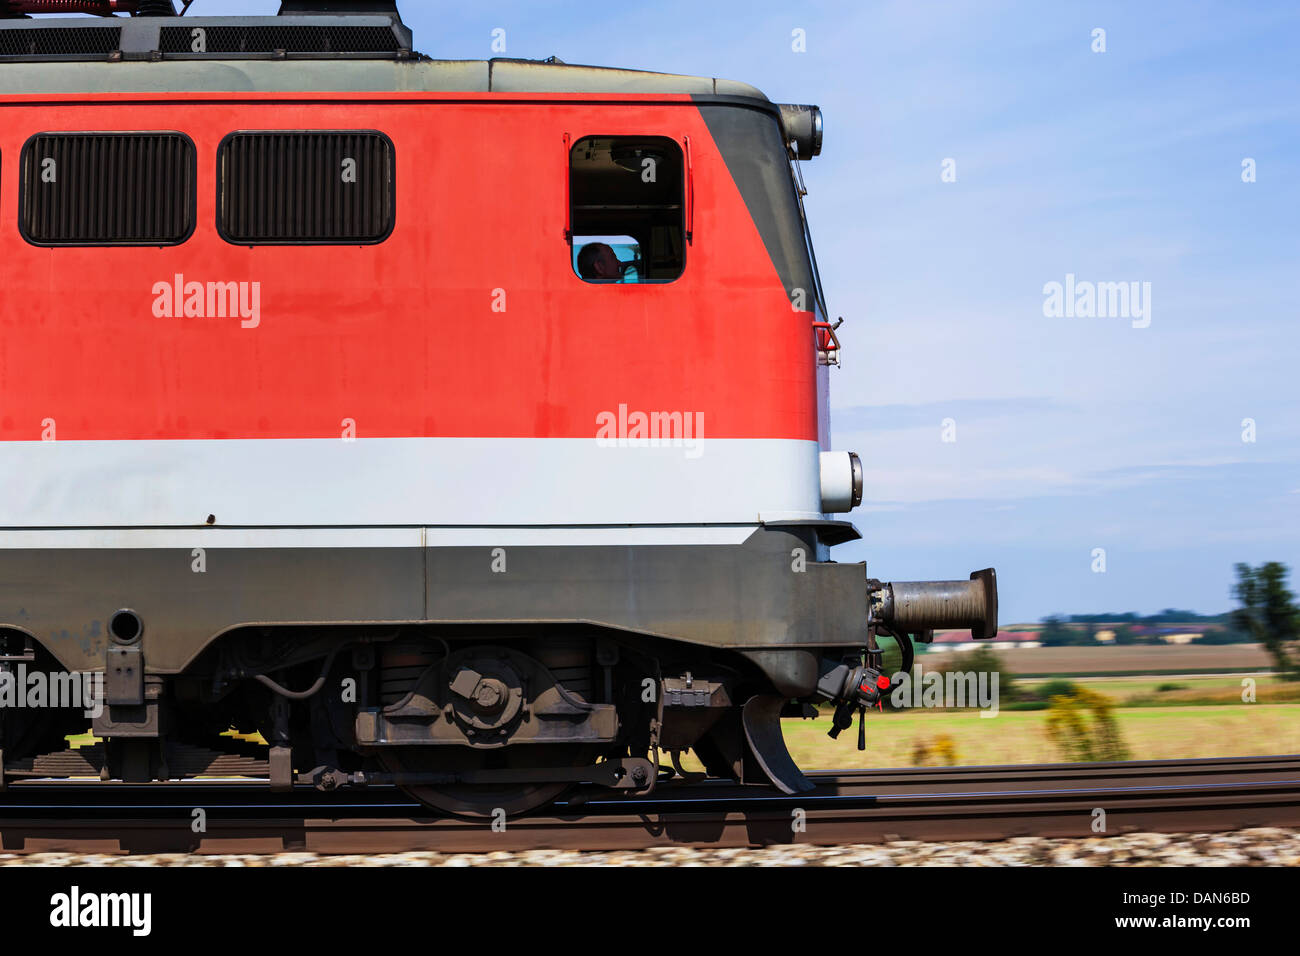 Austria, Freight train engine on rails, close up Stock Photo